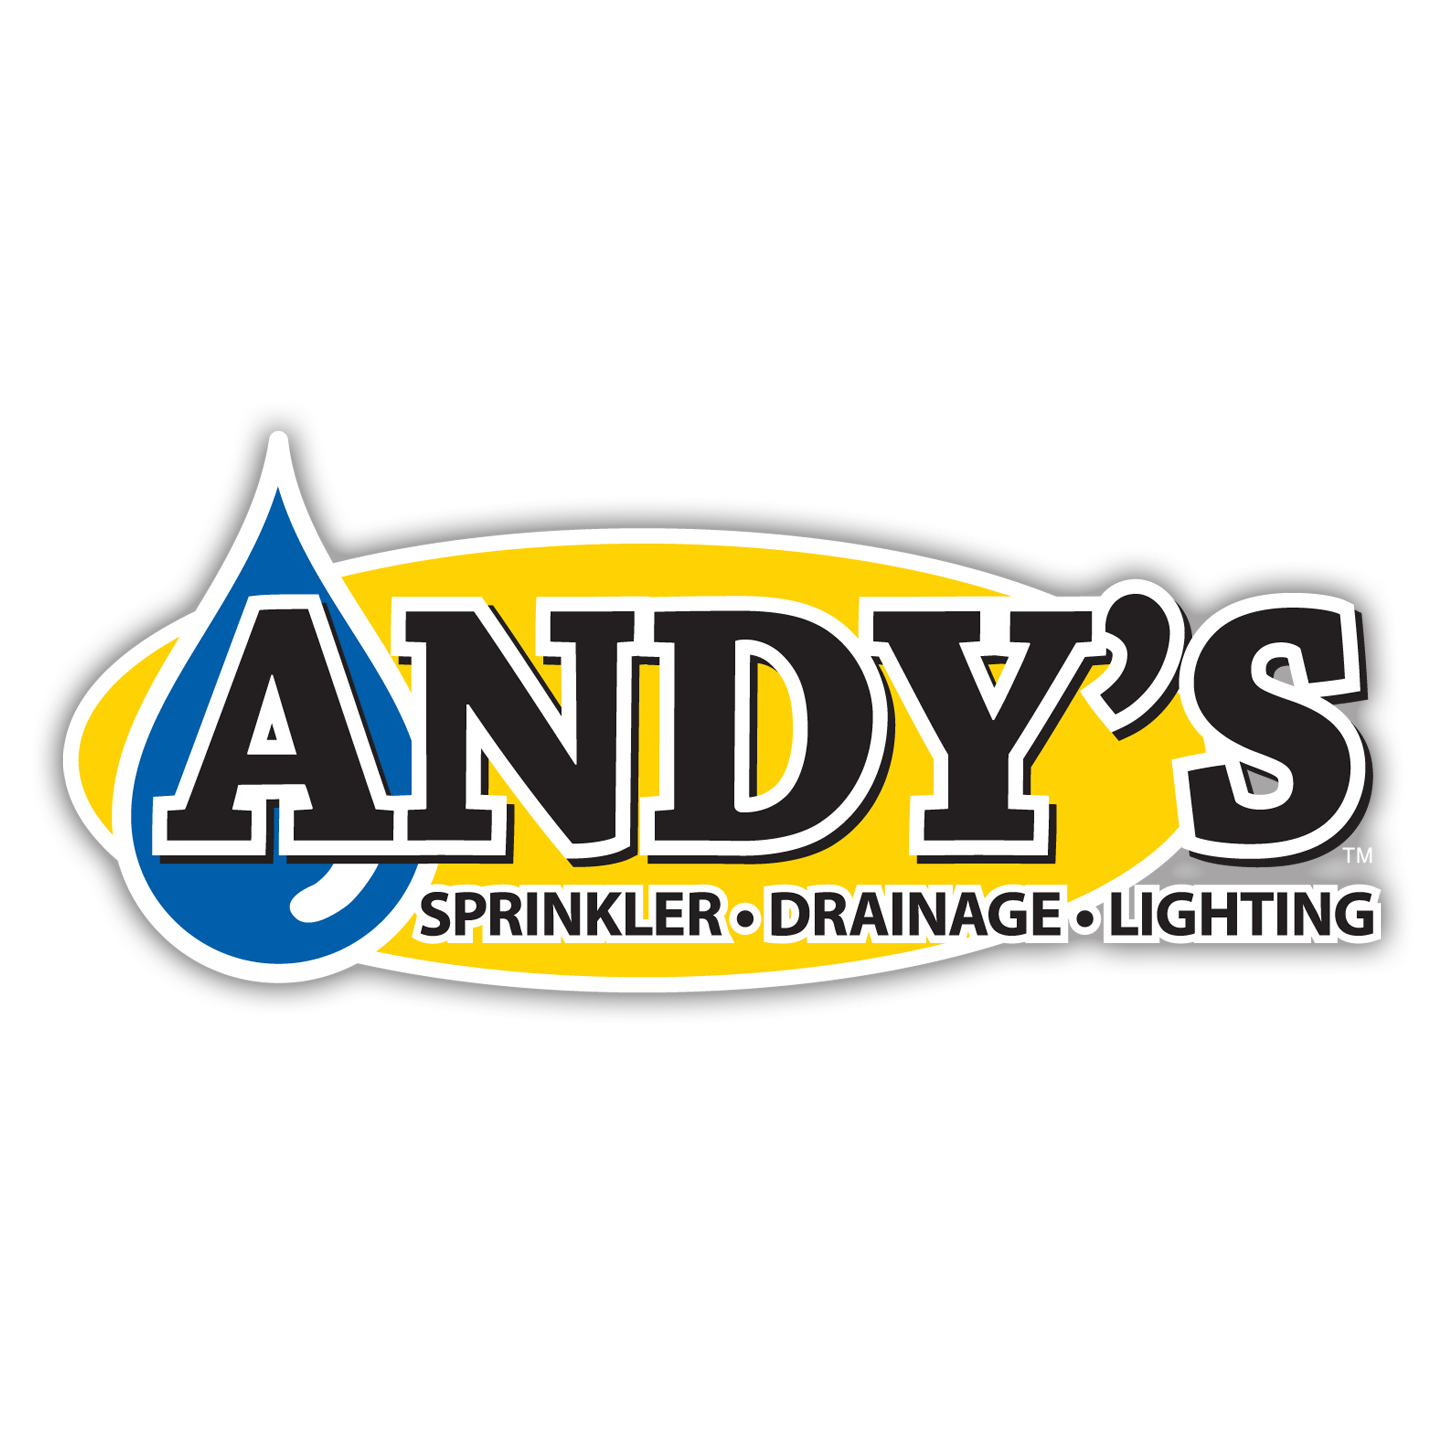 Andy's Sprinkler, Drainage & Lighting - Waco, TX 76712 - (877)650-6276 | ShowMeLocal.com